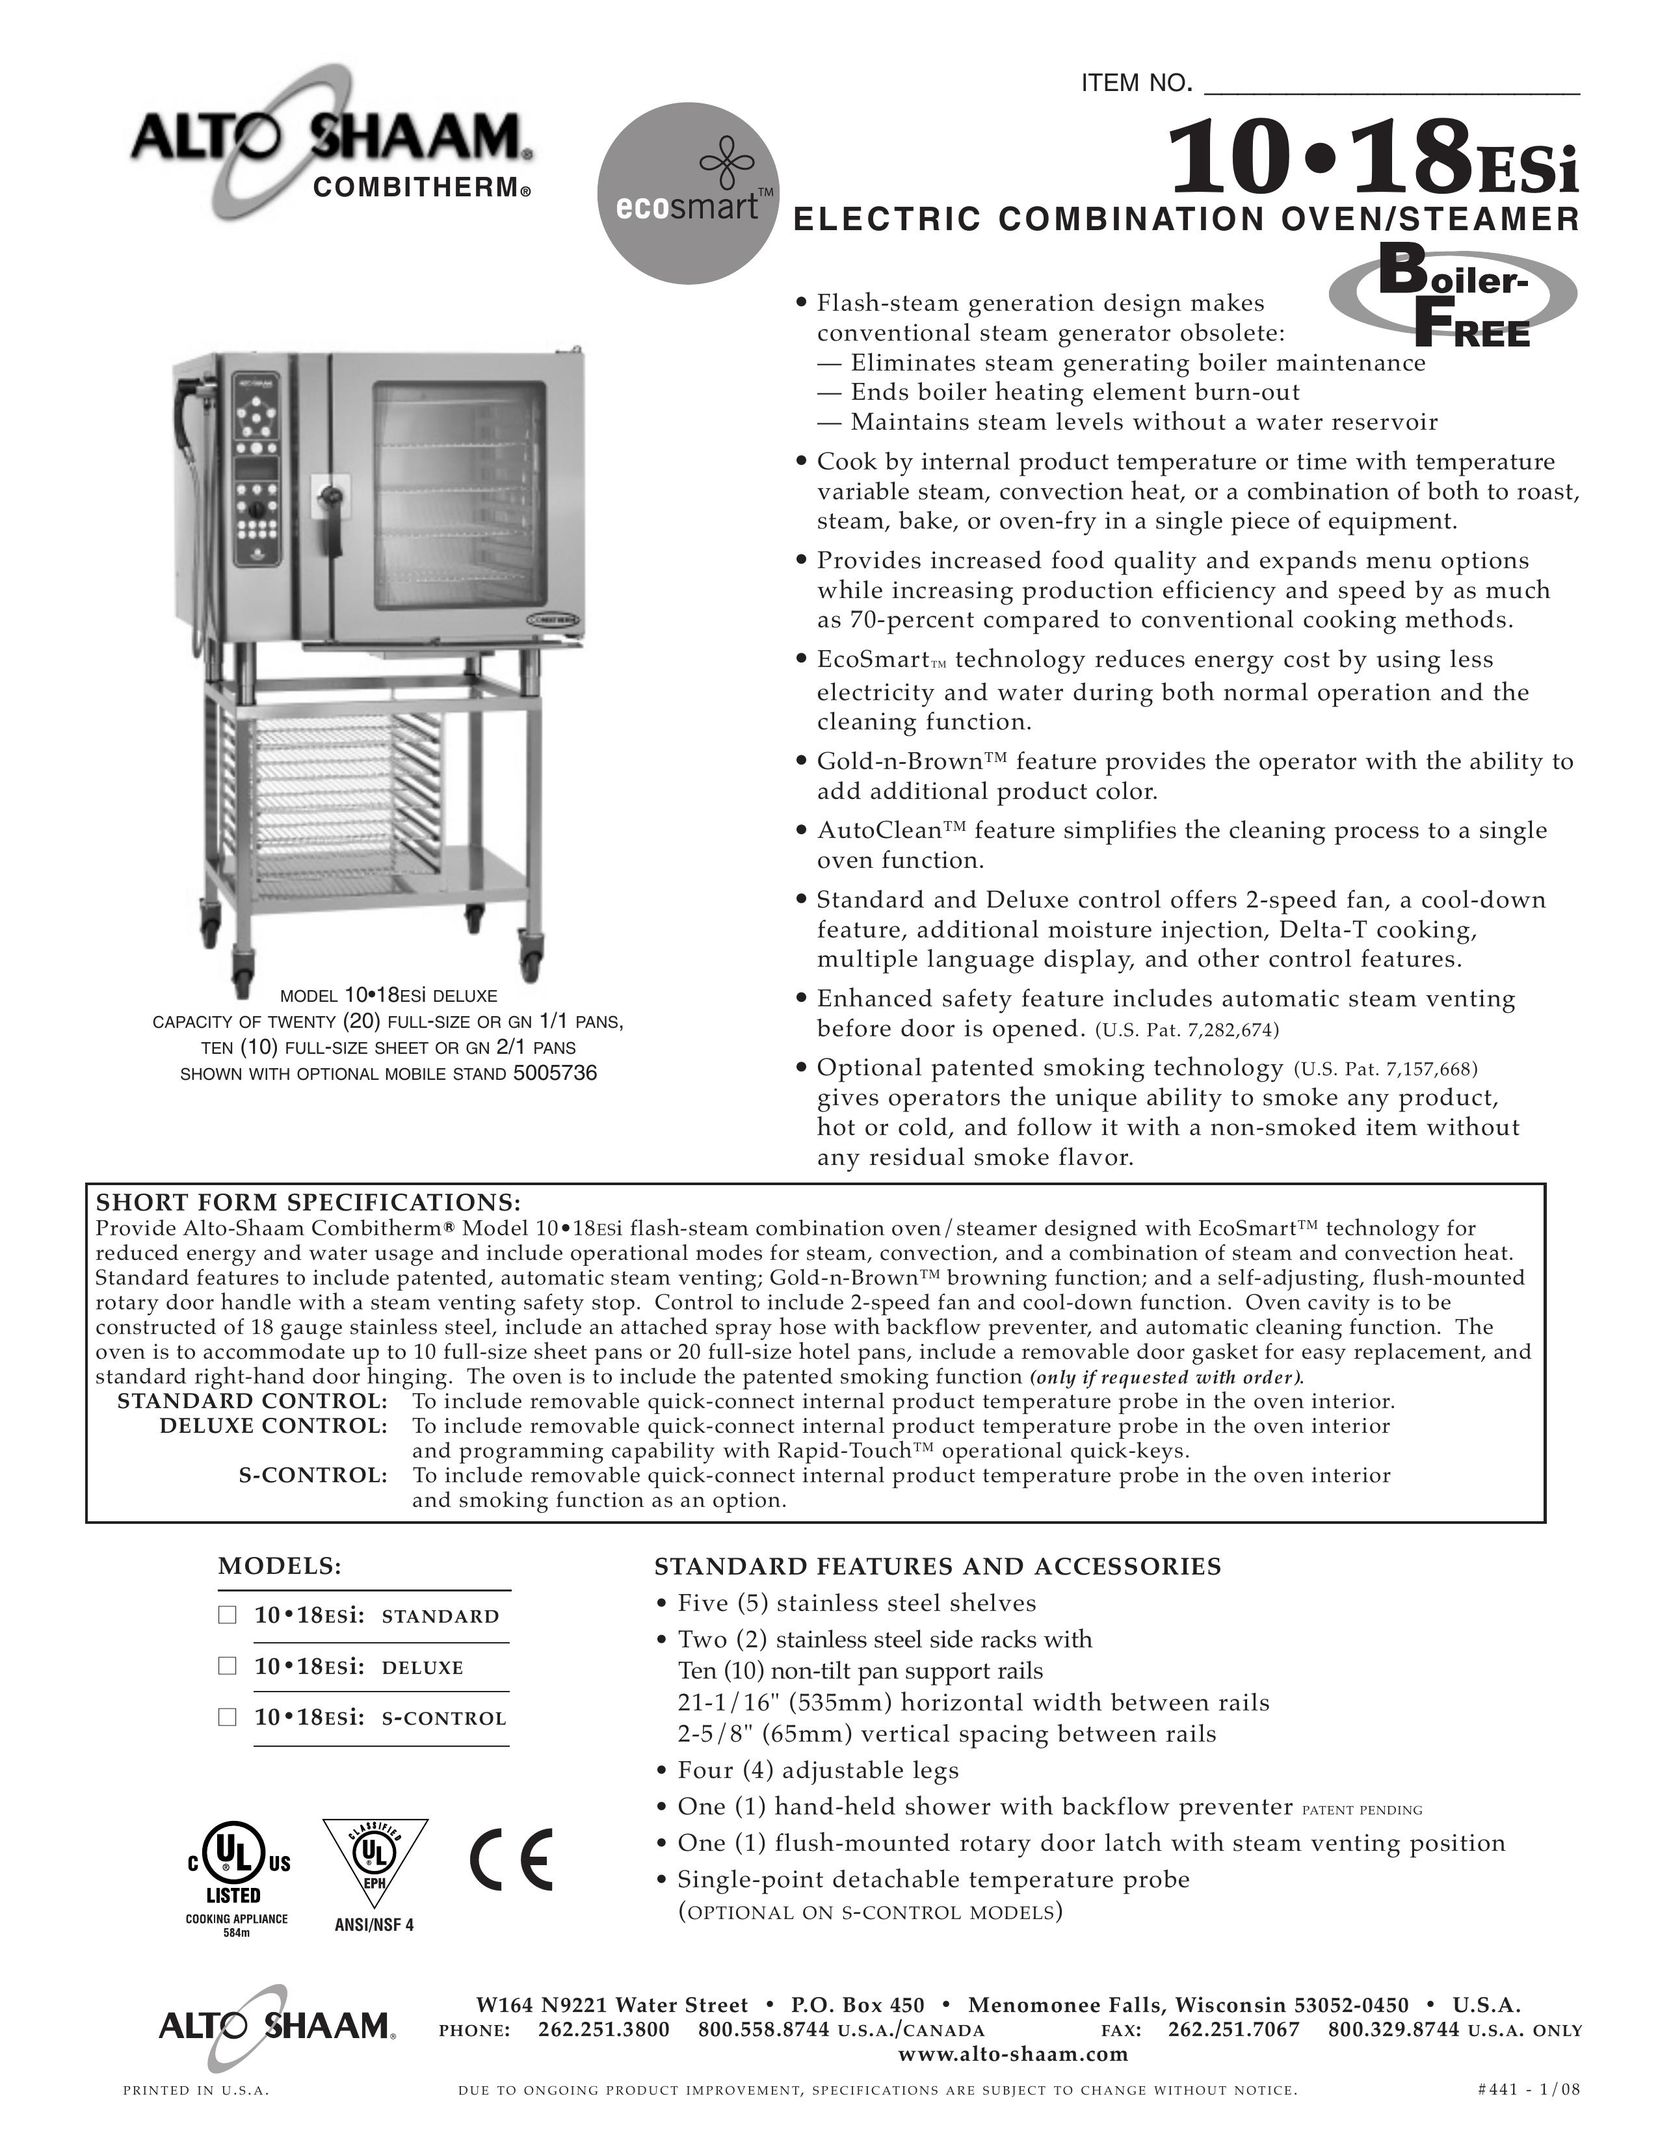 Alto-Shaam 10.18ESi Oven User Manual